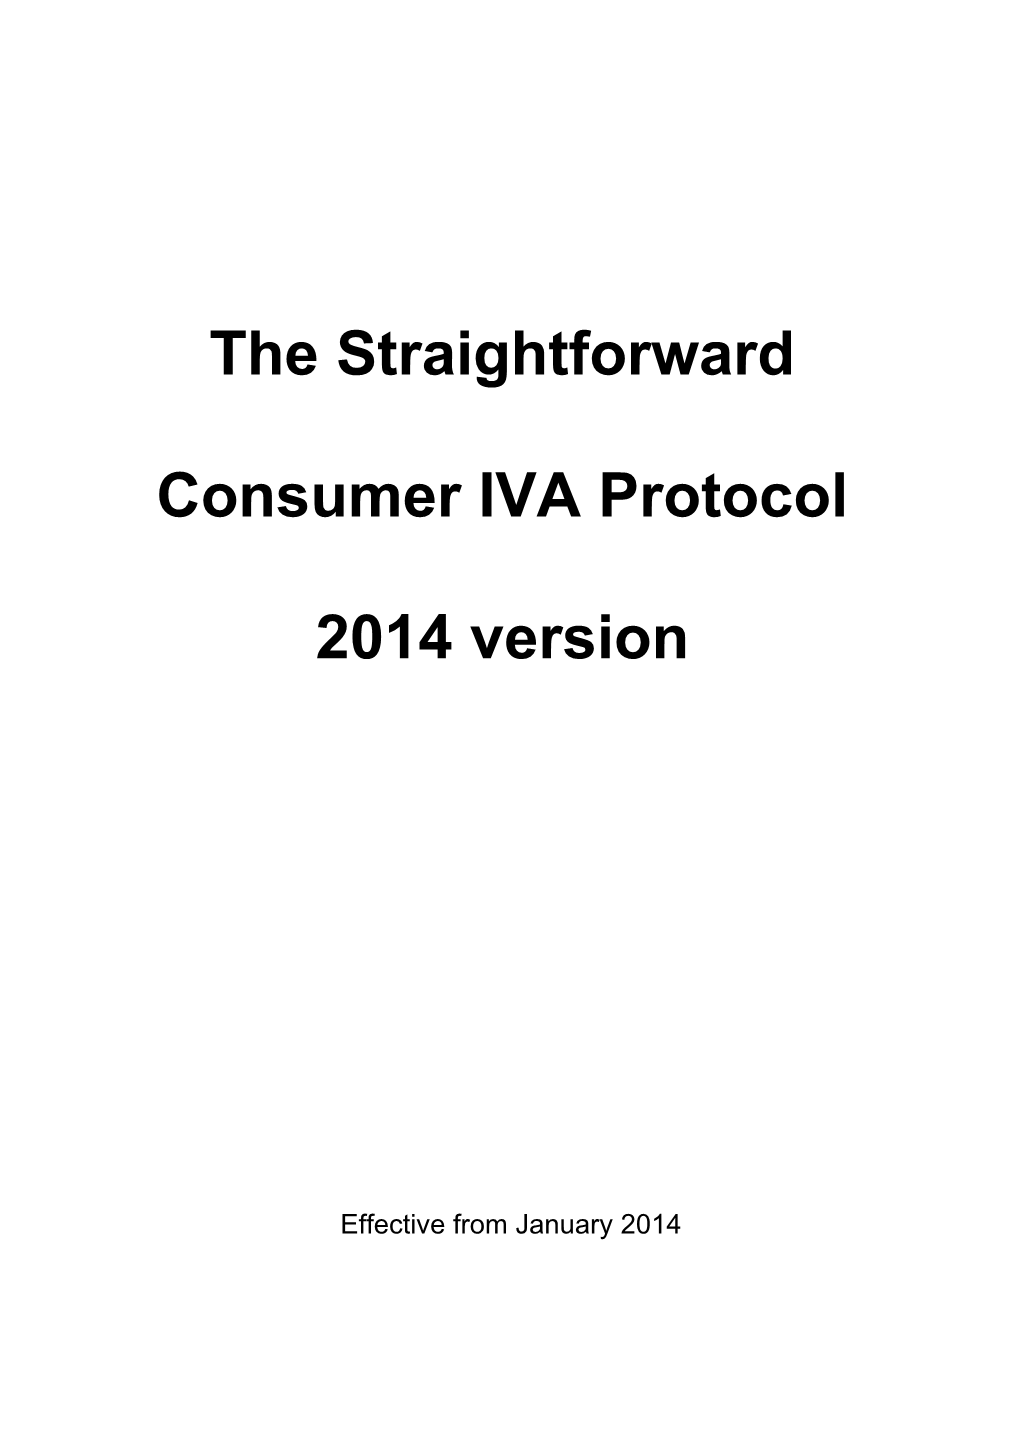 IVA Protocol 2014, Final